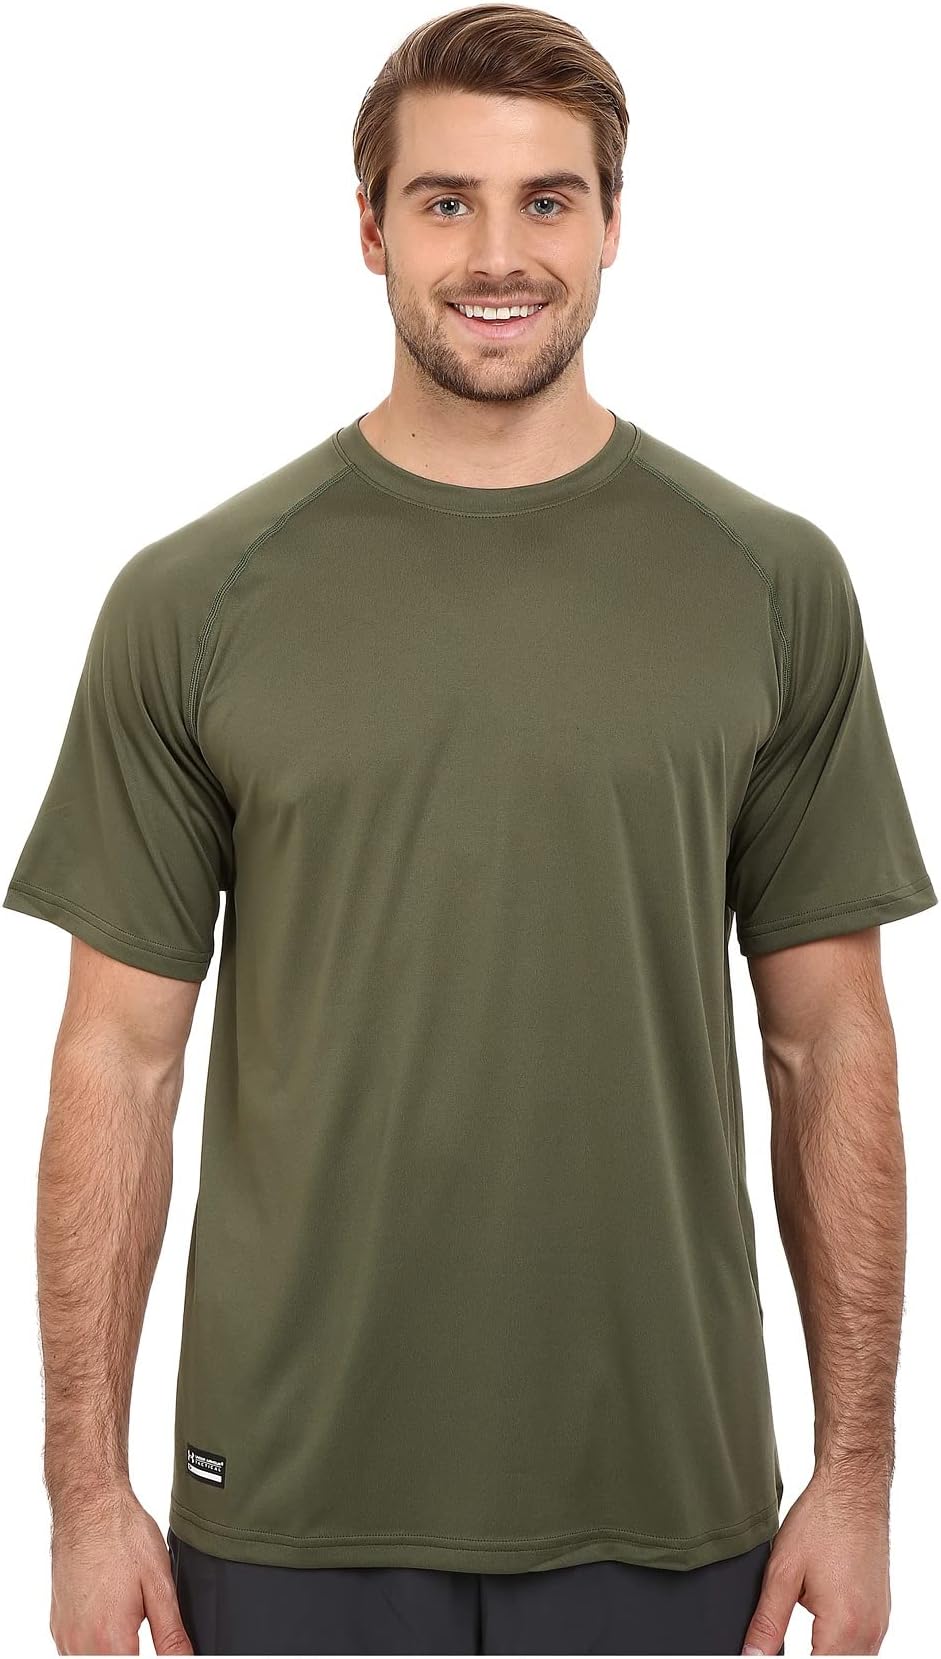 Футболка UA Tac Tech Under Armour, цвет Marine OD Green футболка с короткими рукавами ua tech under armour цвет marine od green black